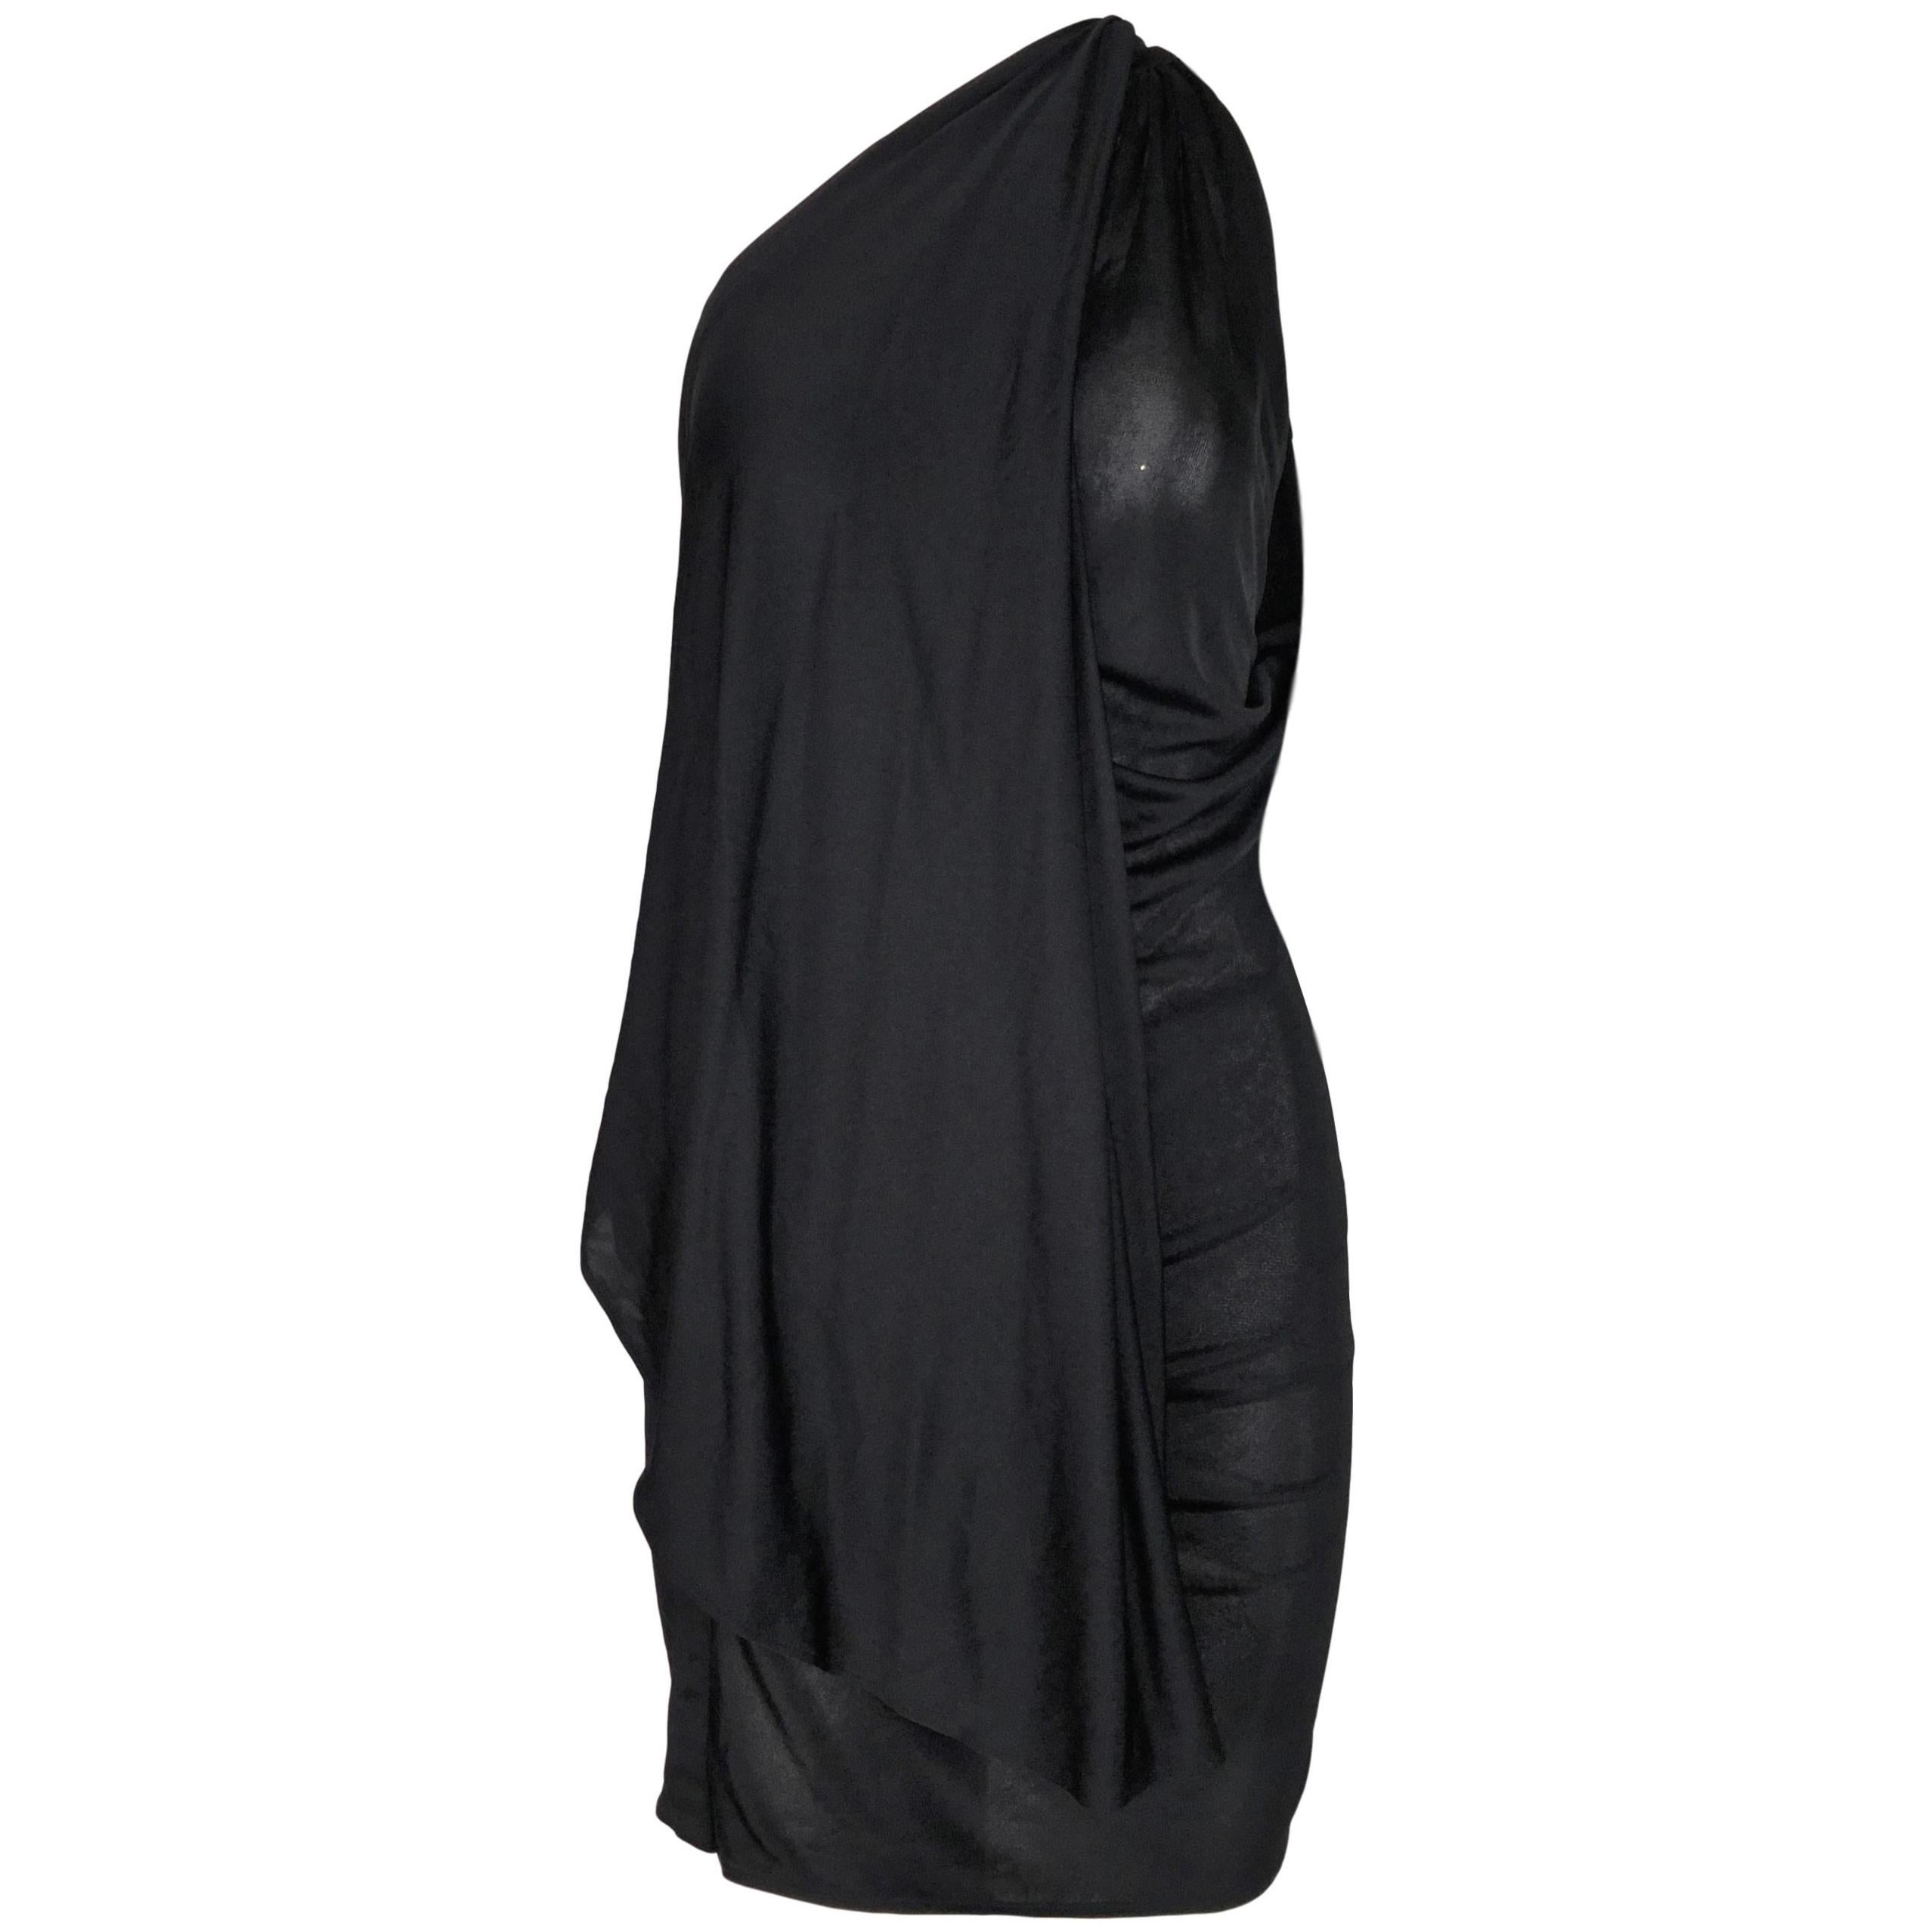 S/S 2002 Gianni Versace Sheer Black One Shoulder Mini Dress